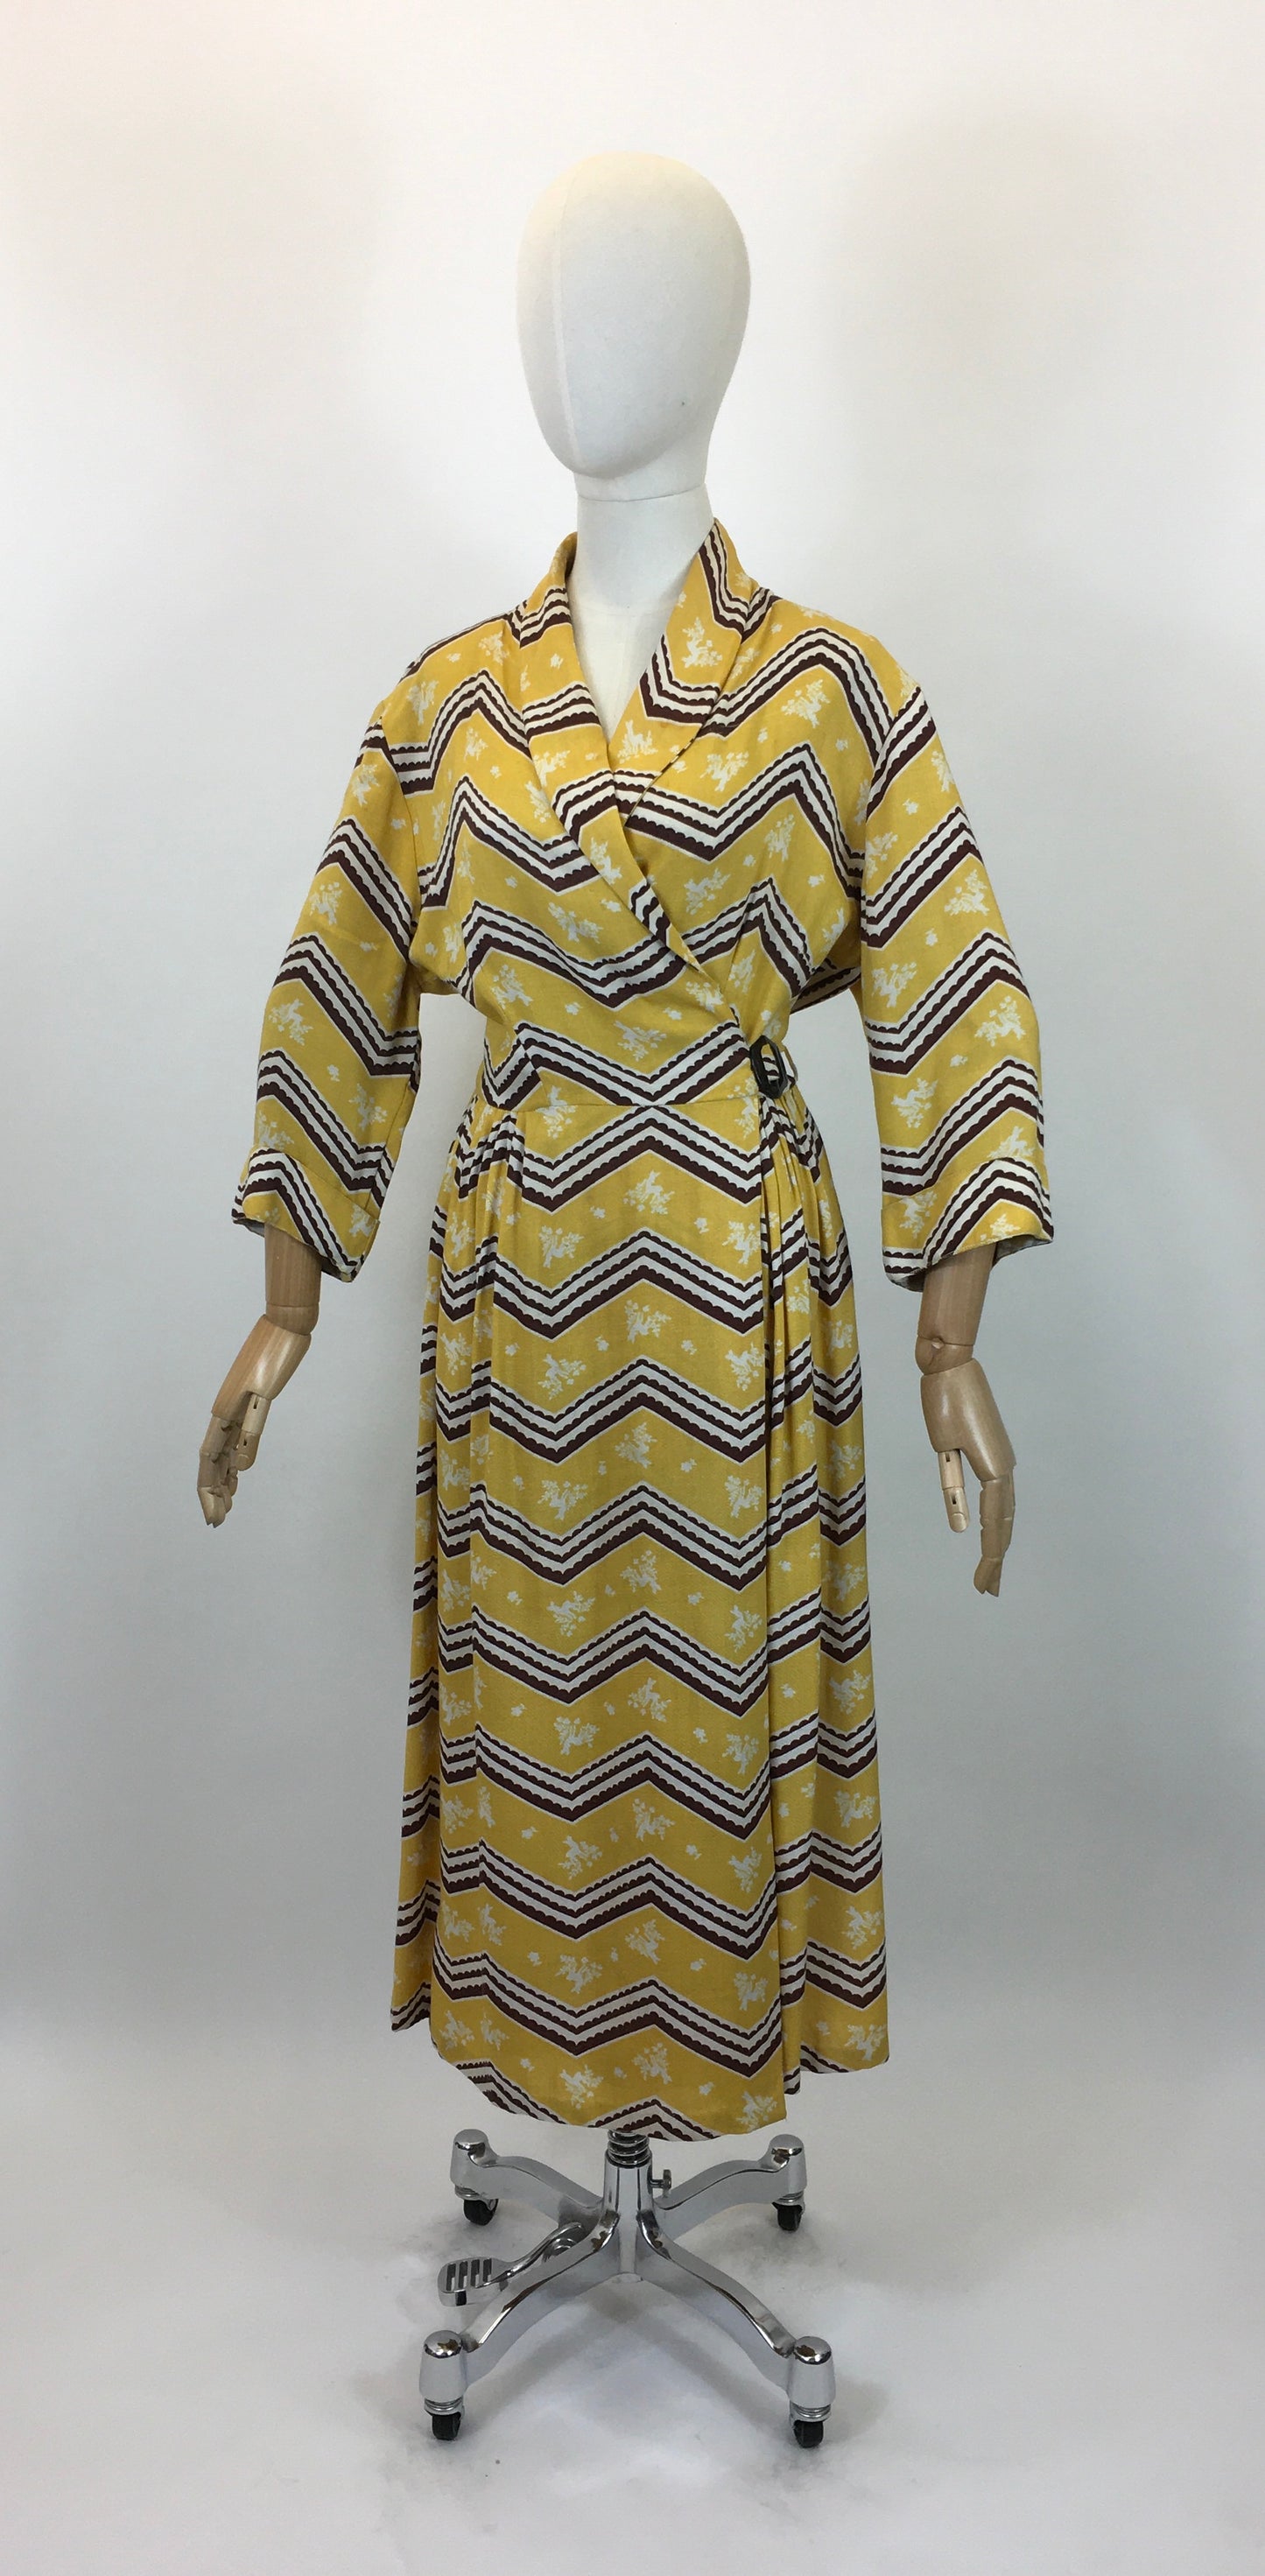 Original 1940's Sensational CC41 Moygashol Linen Novelty Print Dress - In Chocolate Brown, Cream and Mustard